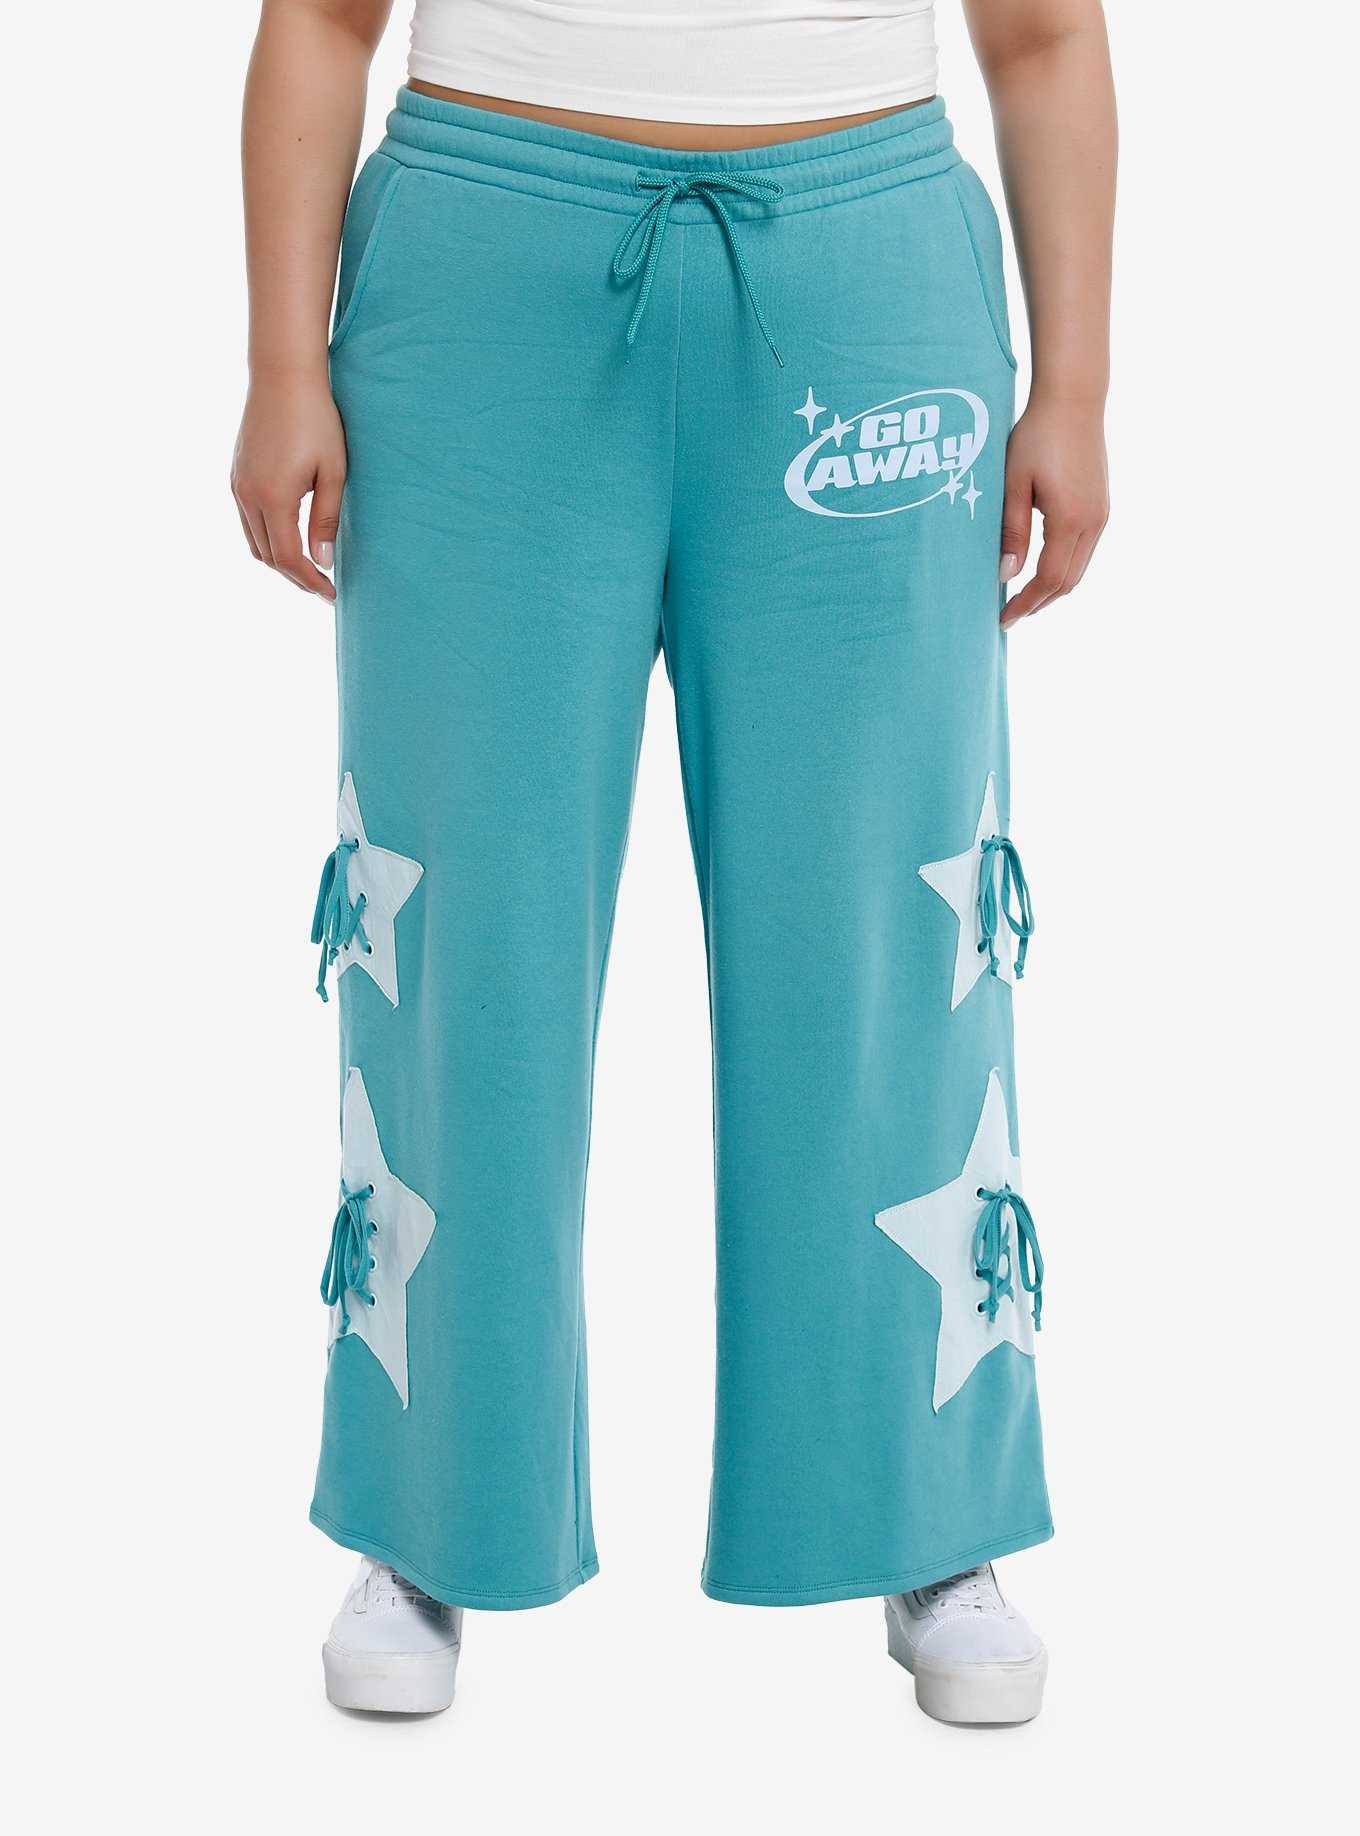 Hot Topic Cinnamoroll Unicorns Girls Pajama Pants Plus